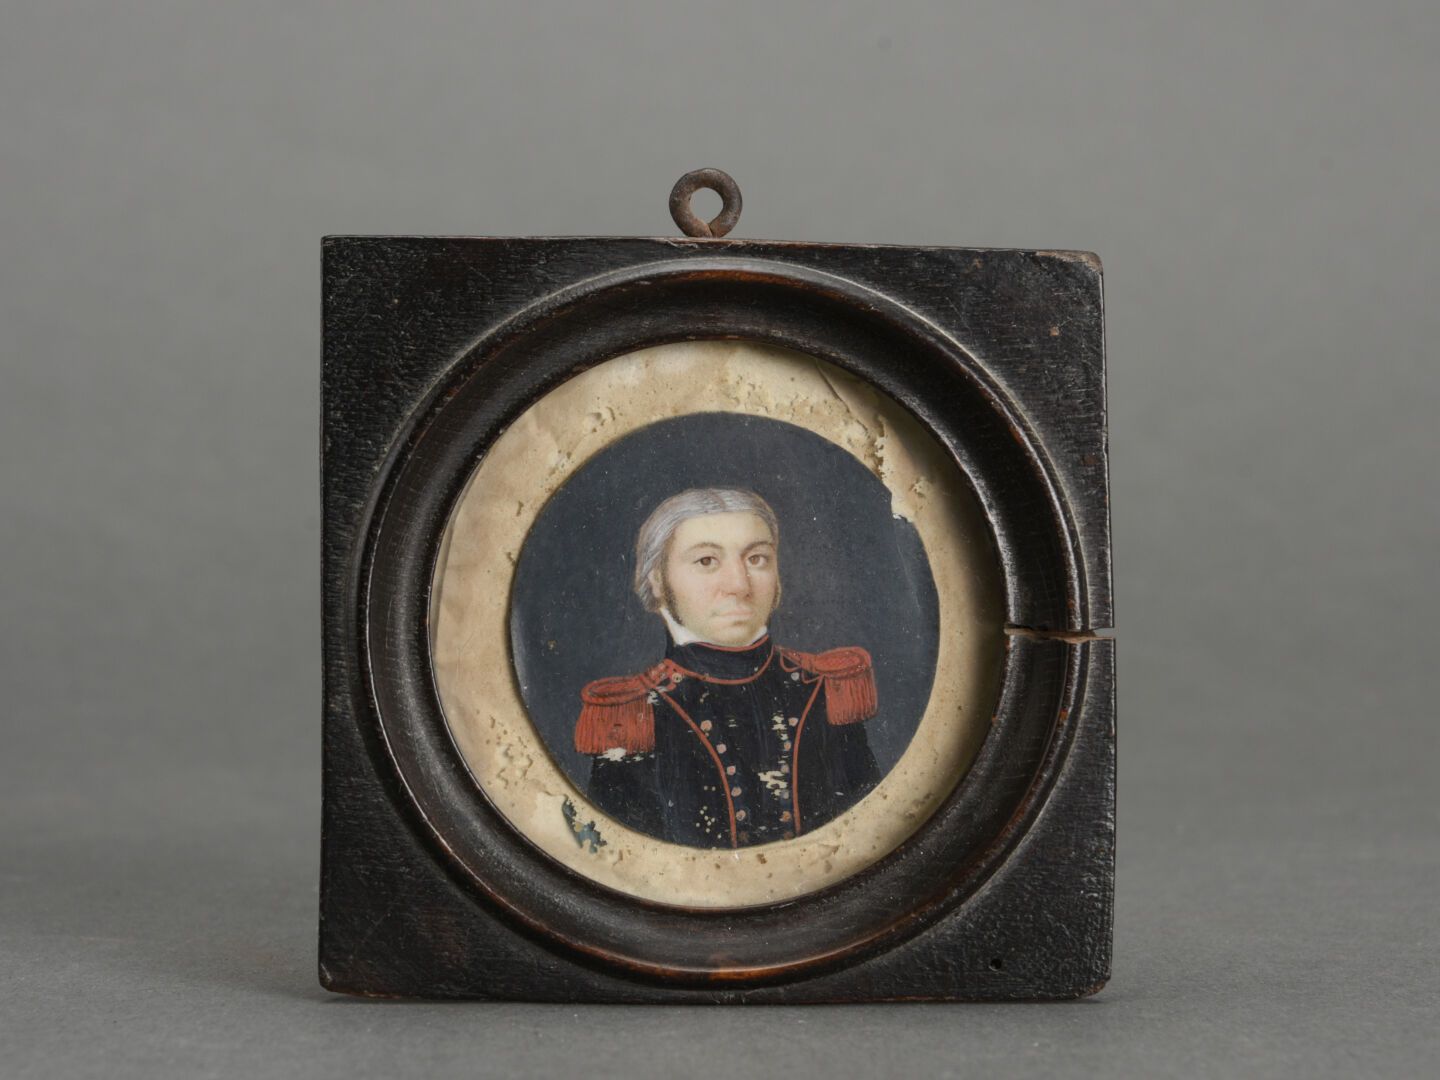 Null 19世纪的微型画
军官画像 
革命时期
直径：6厘米
(制服纽扣上的小缺失)